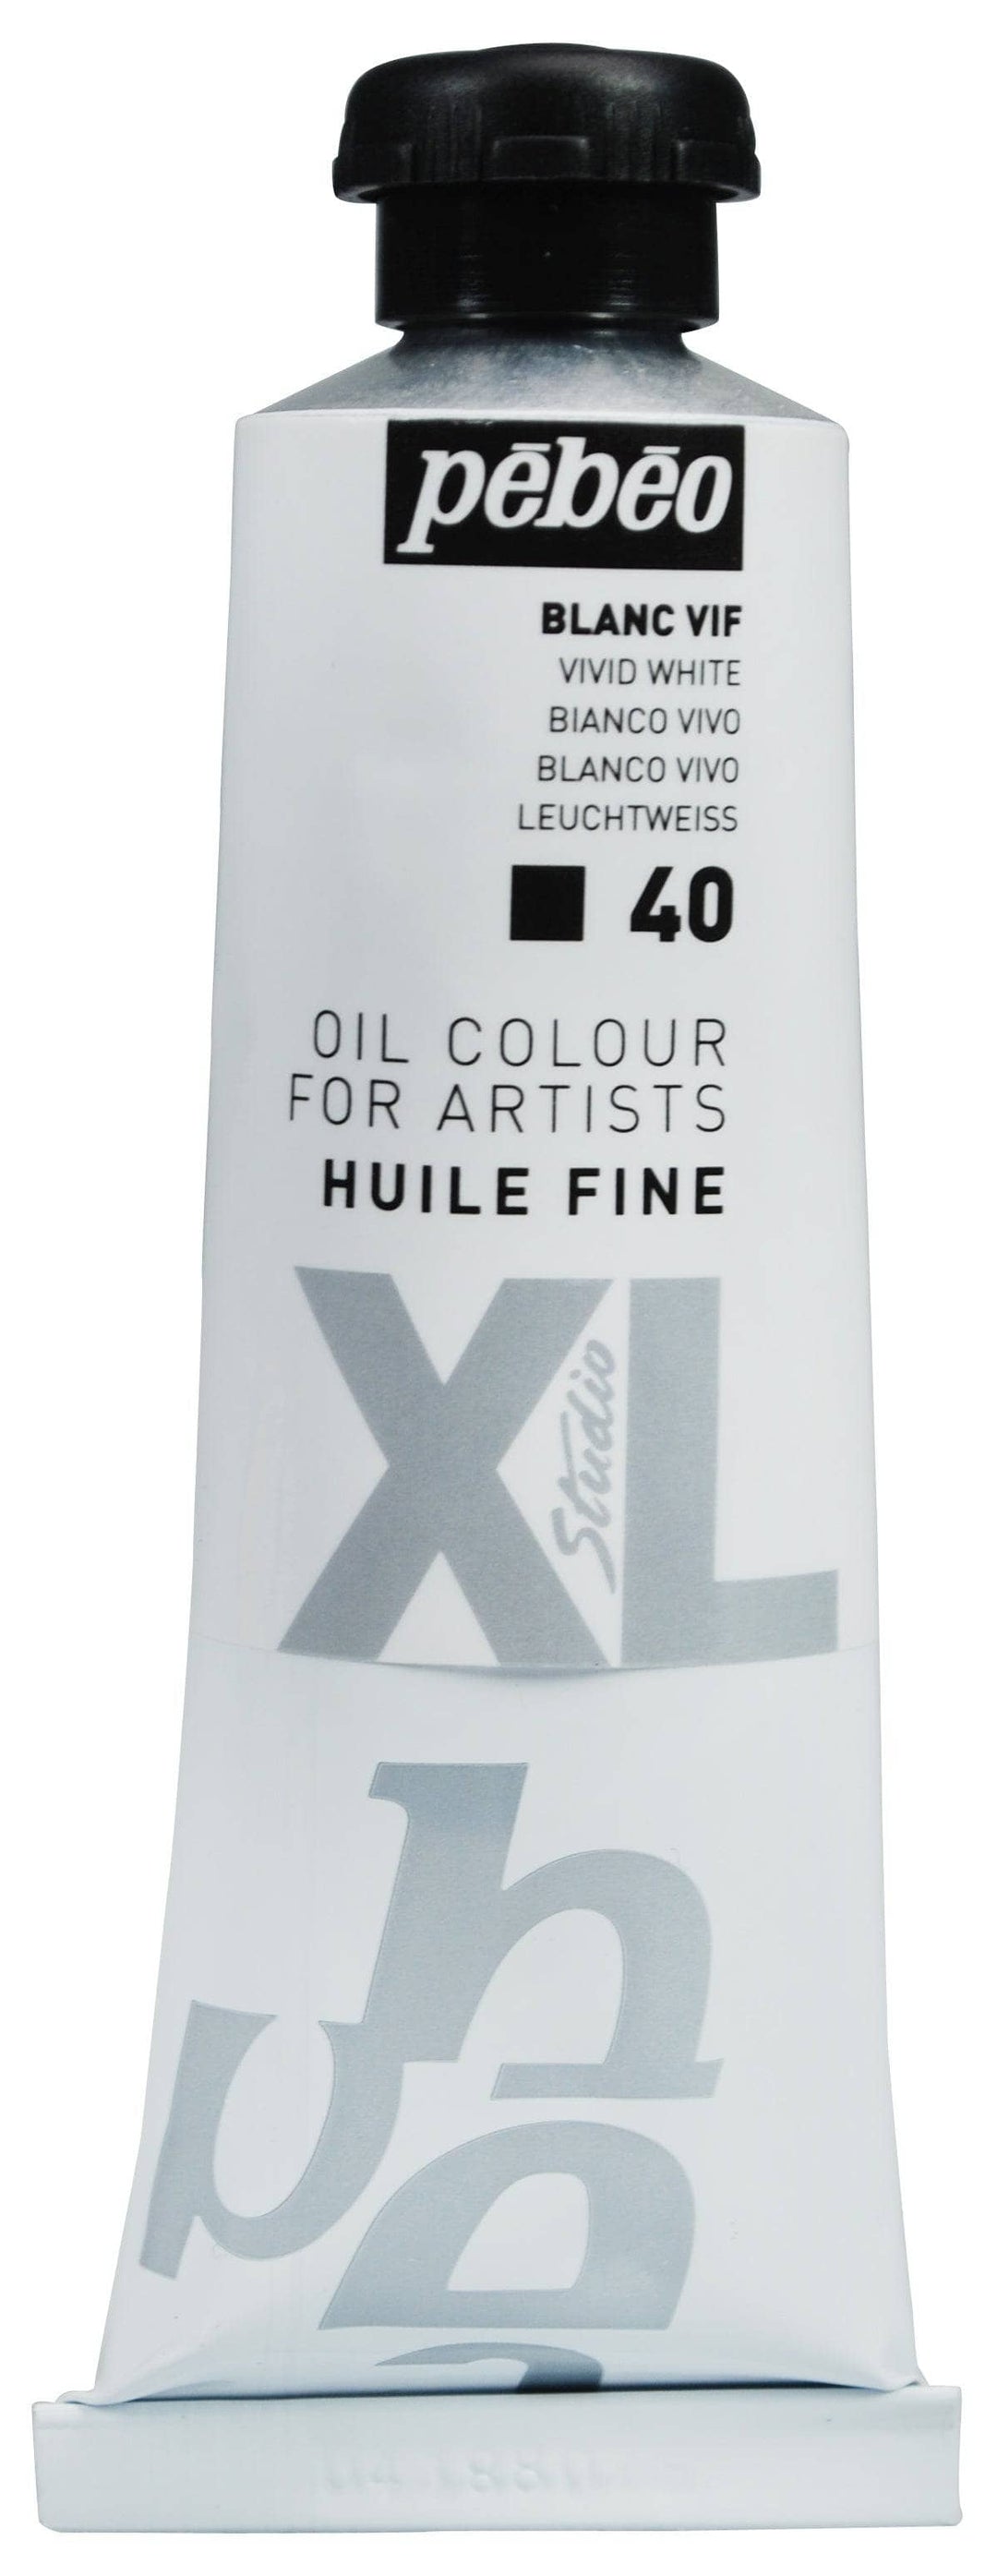 Huile fine Studio XL 37ml - Blanc Vif
PB937040